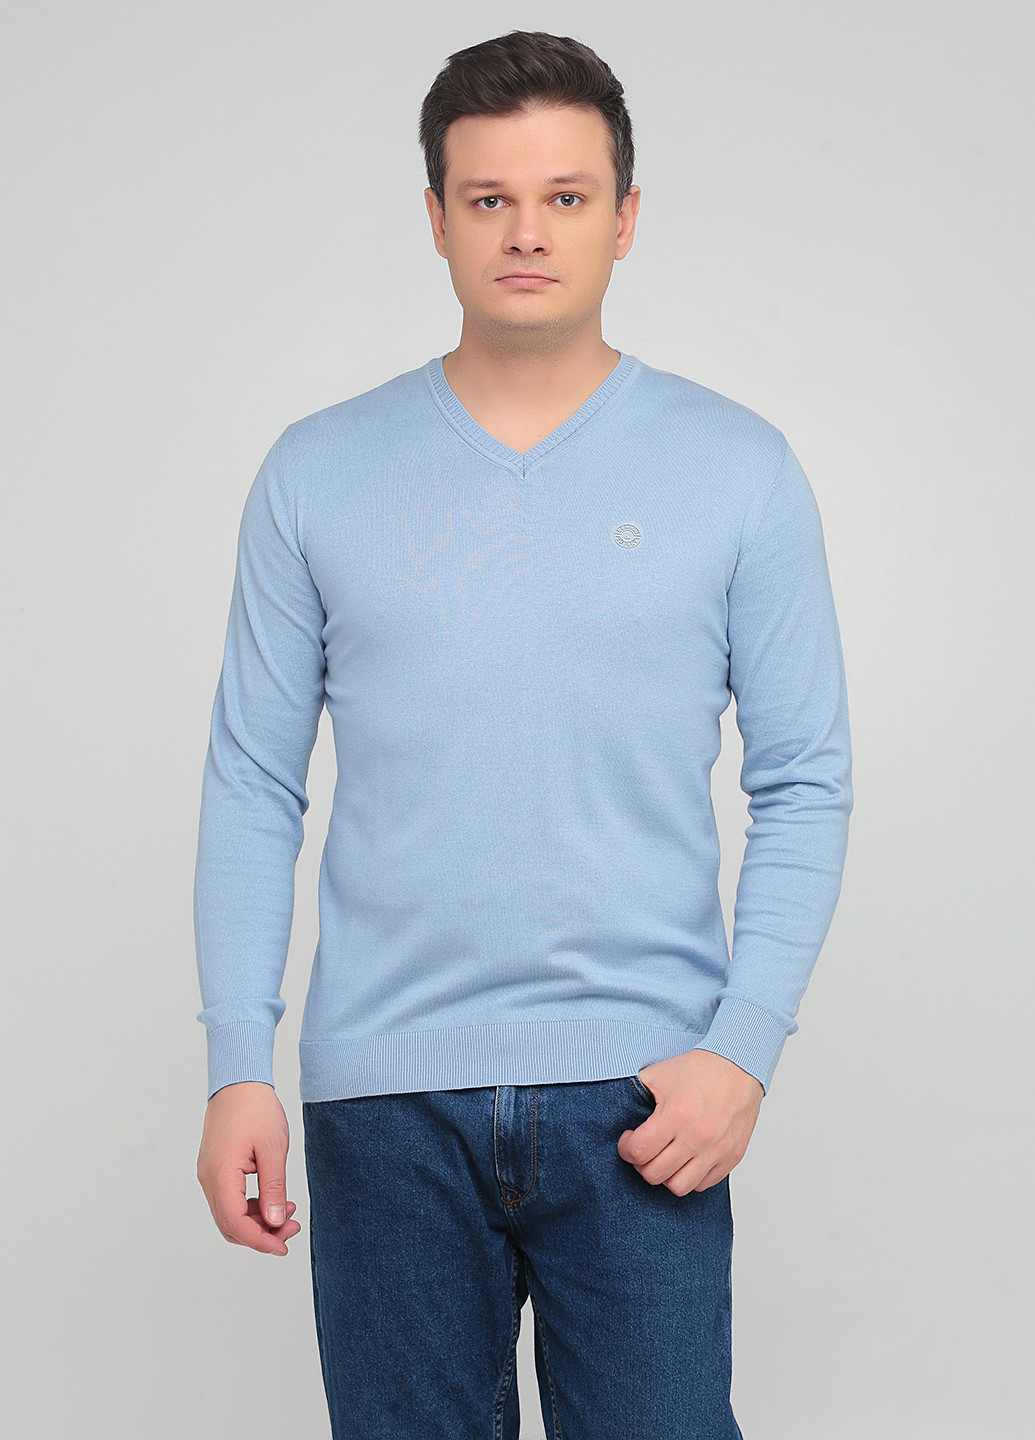 Голубой демисезонный пуловер пуловер Benson & Cherry